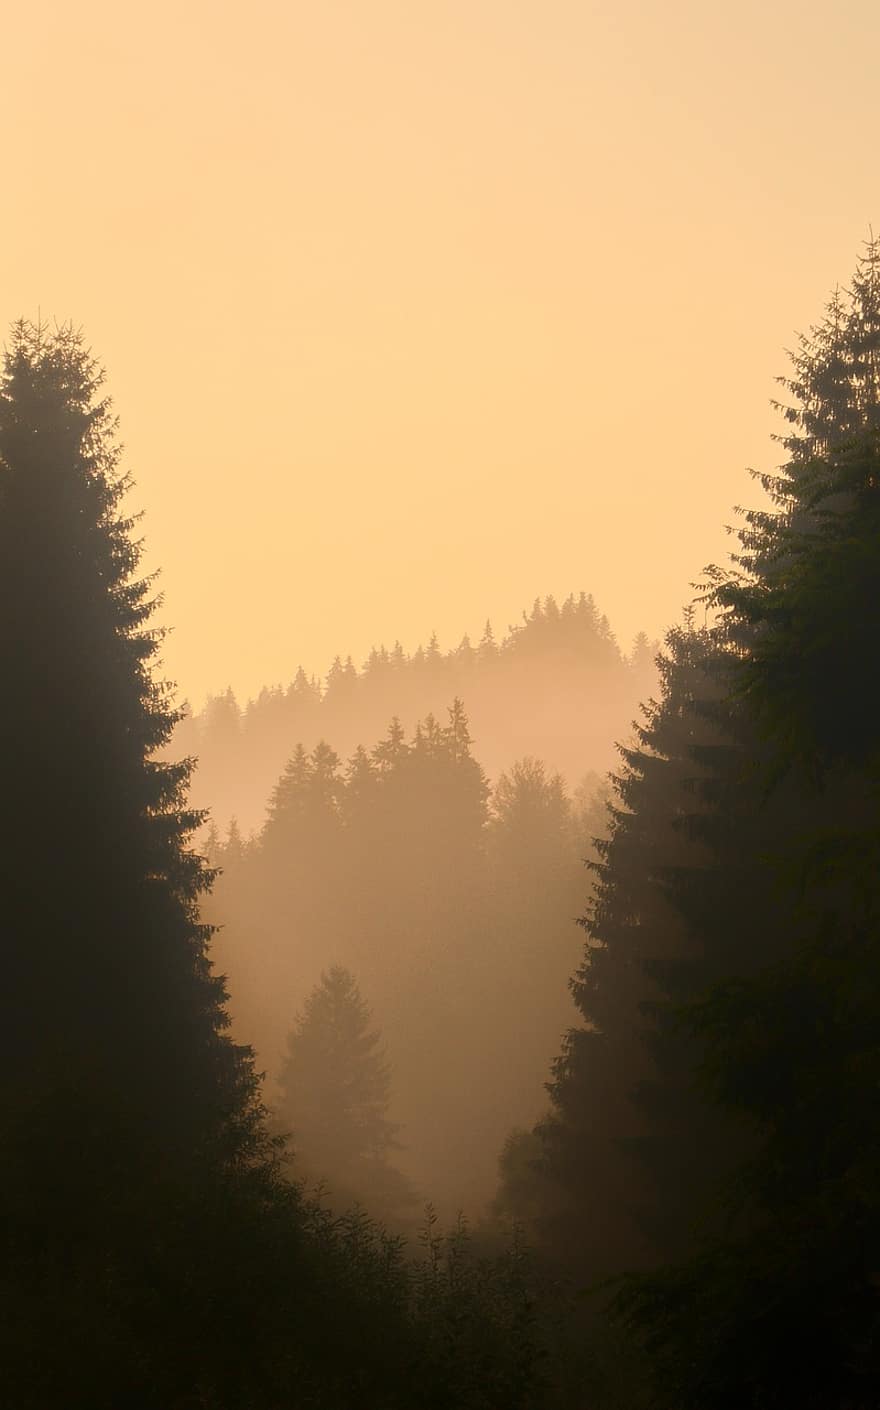 Silhouette, Sunset, Hazy, Fog, Mountains, Nature, Landscape, tree, forest, autumn, sunlight